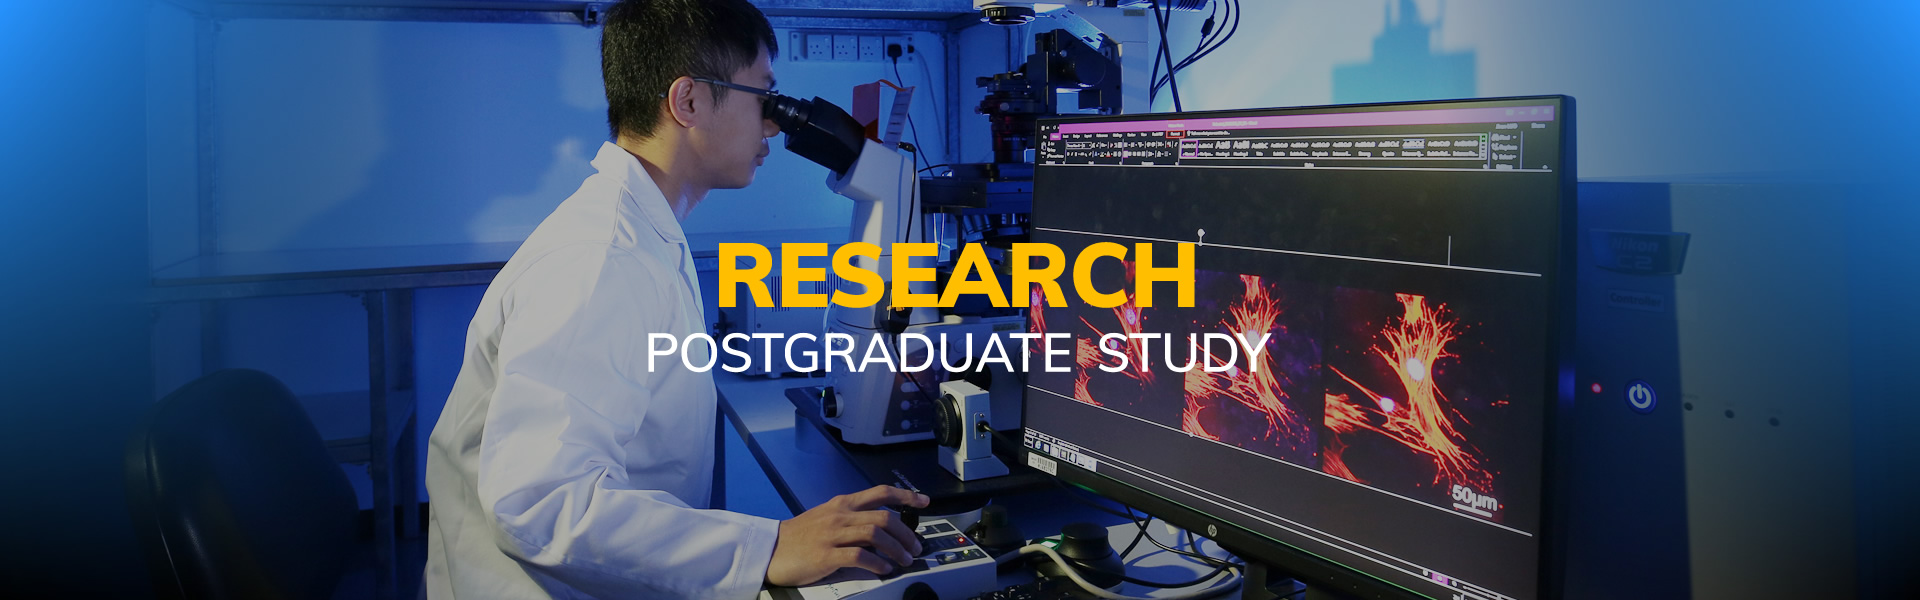 Research Postgraduate Study